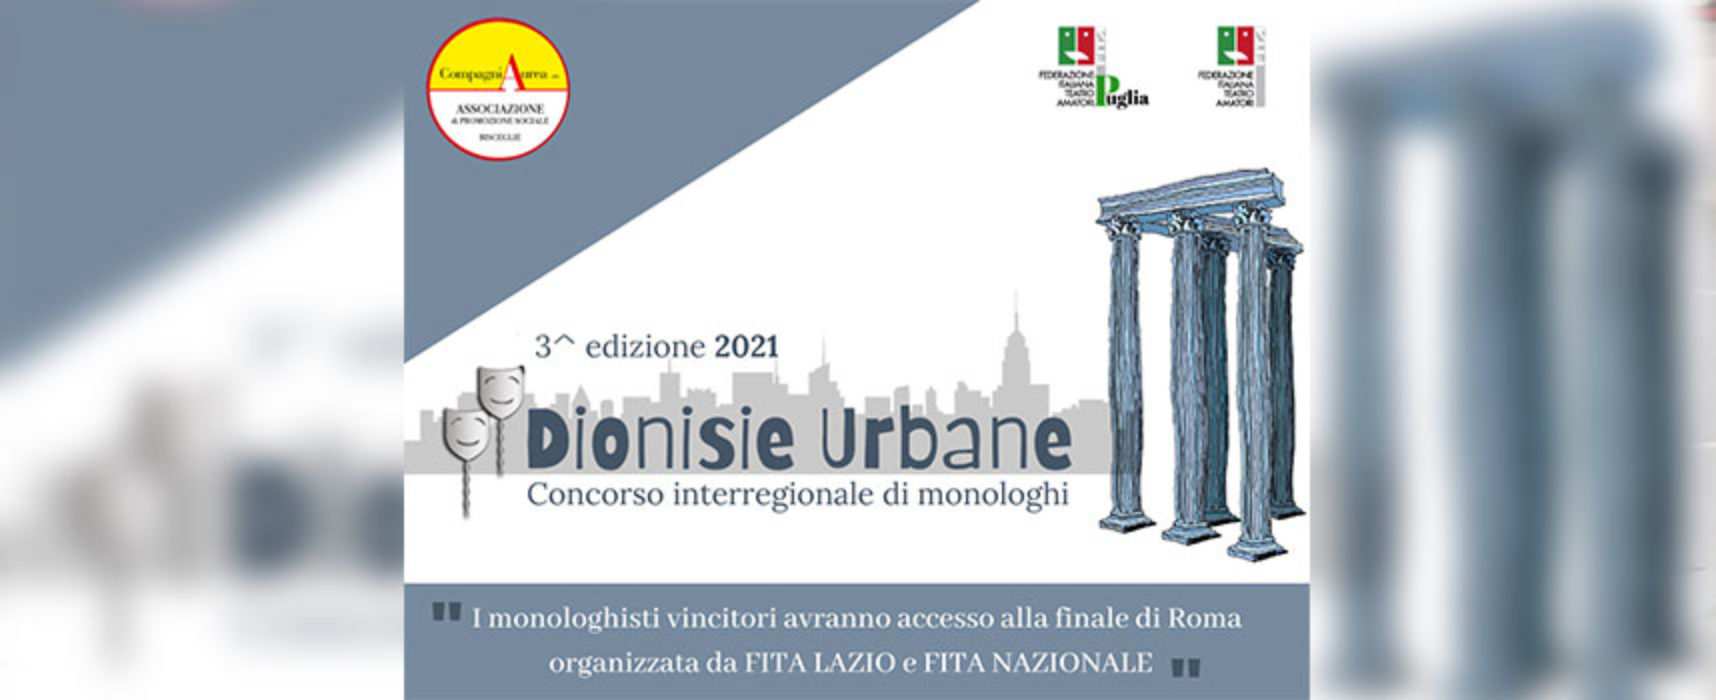 CompagniAurea, aperte le candidature per Dionisie Urbane 2021